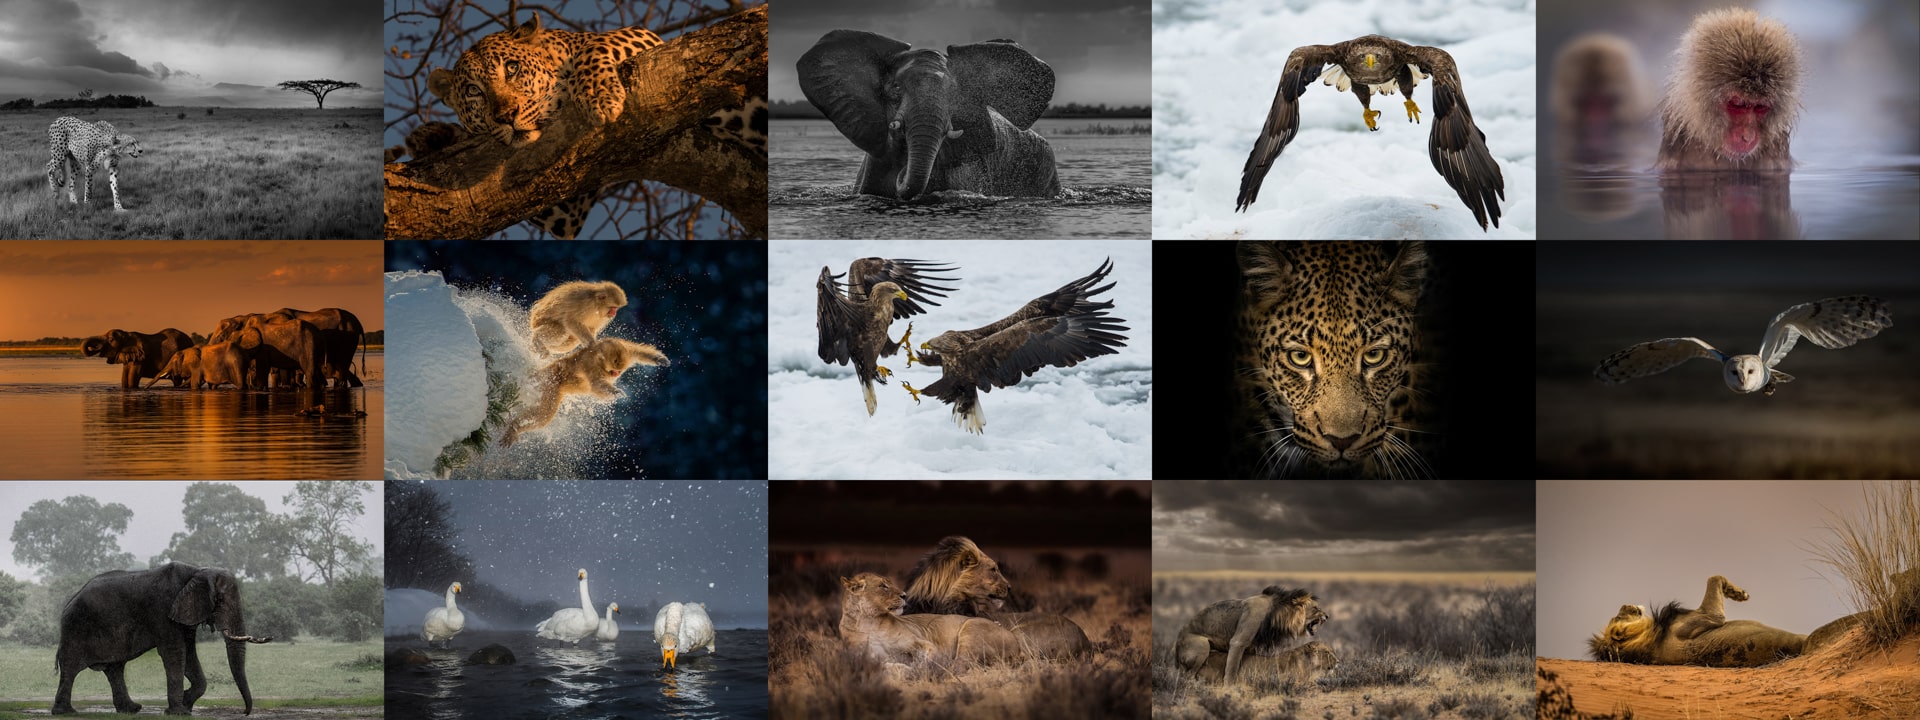 learn wildlife photography, wildlife photography course, wildlife photography classes